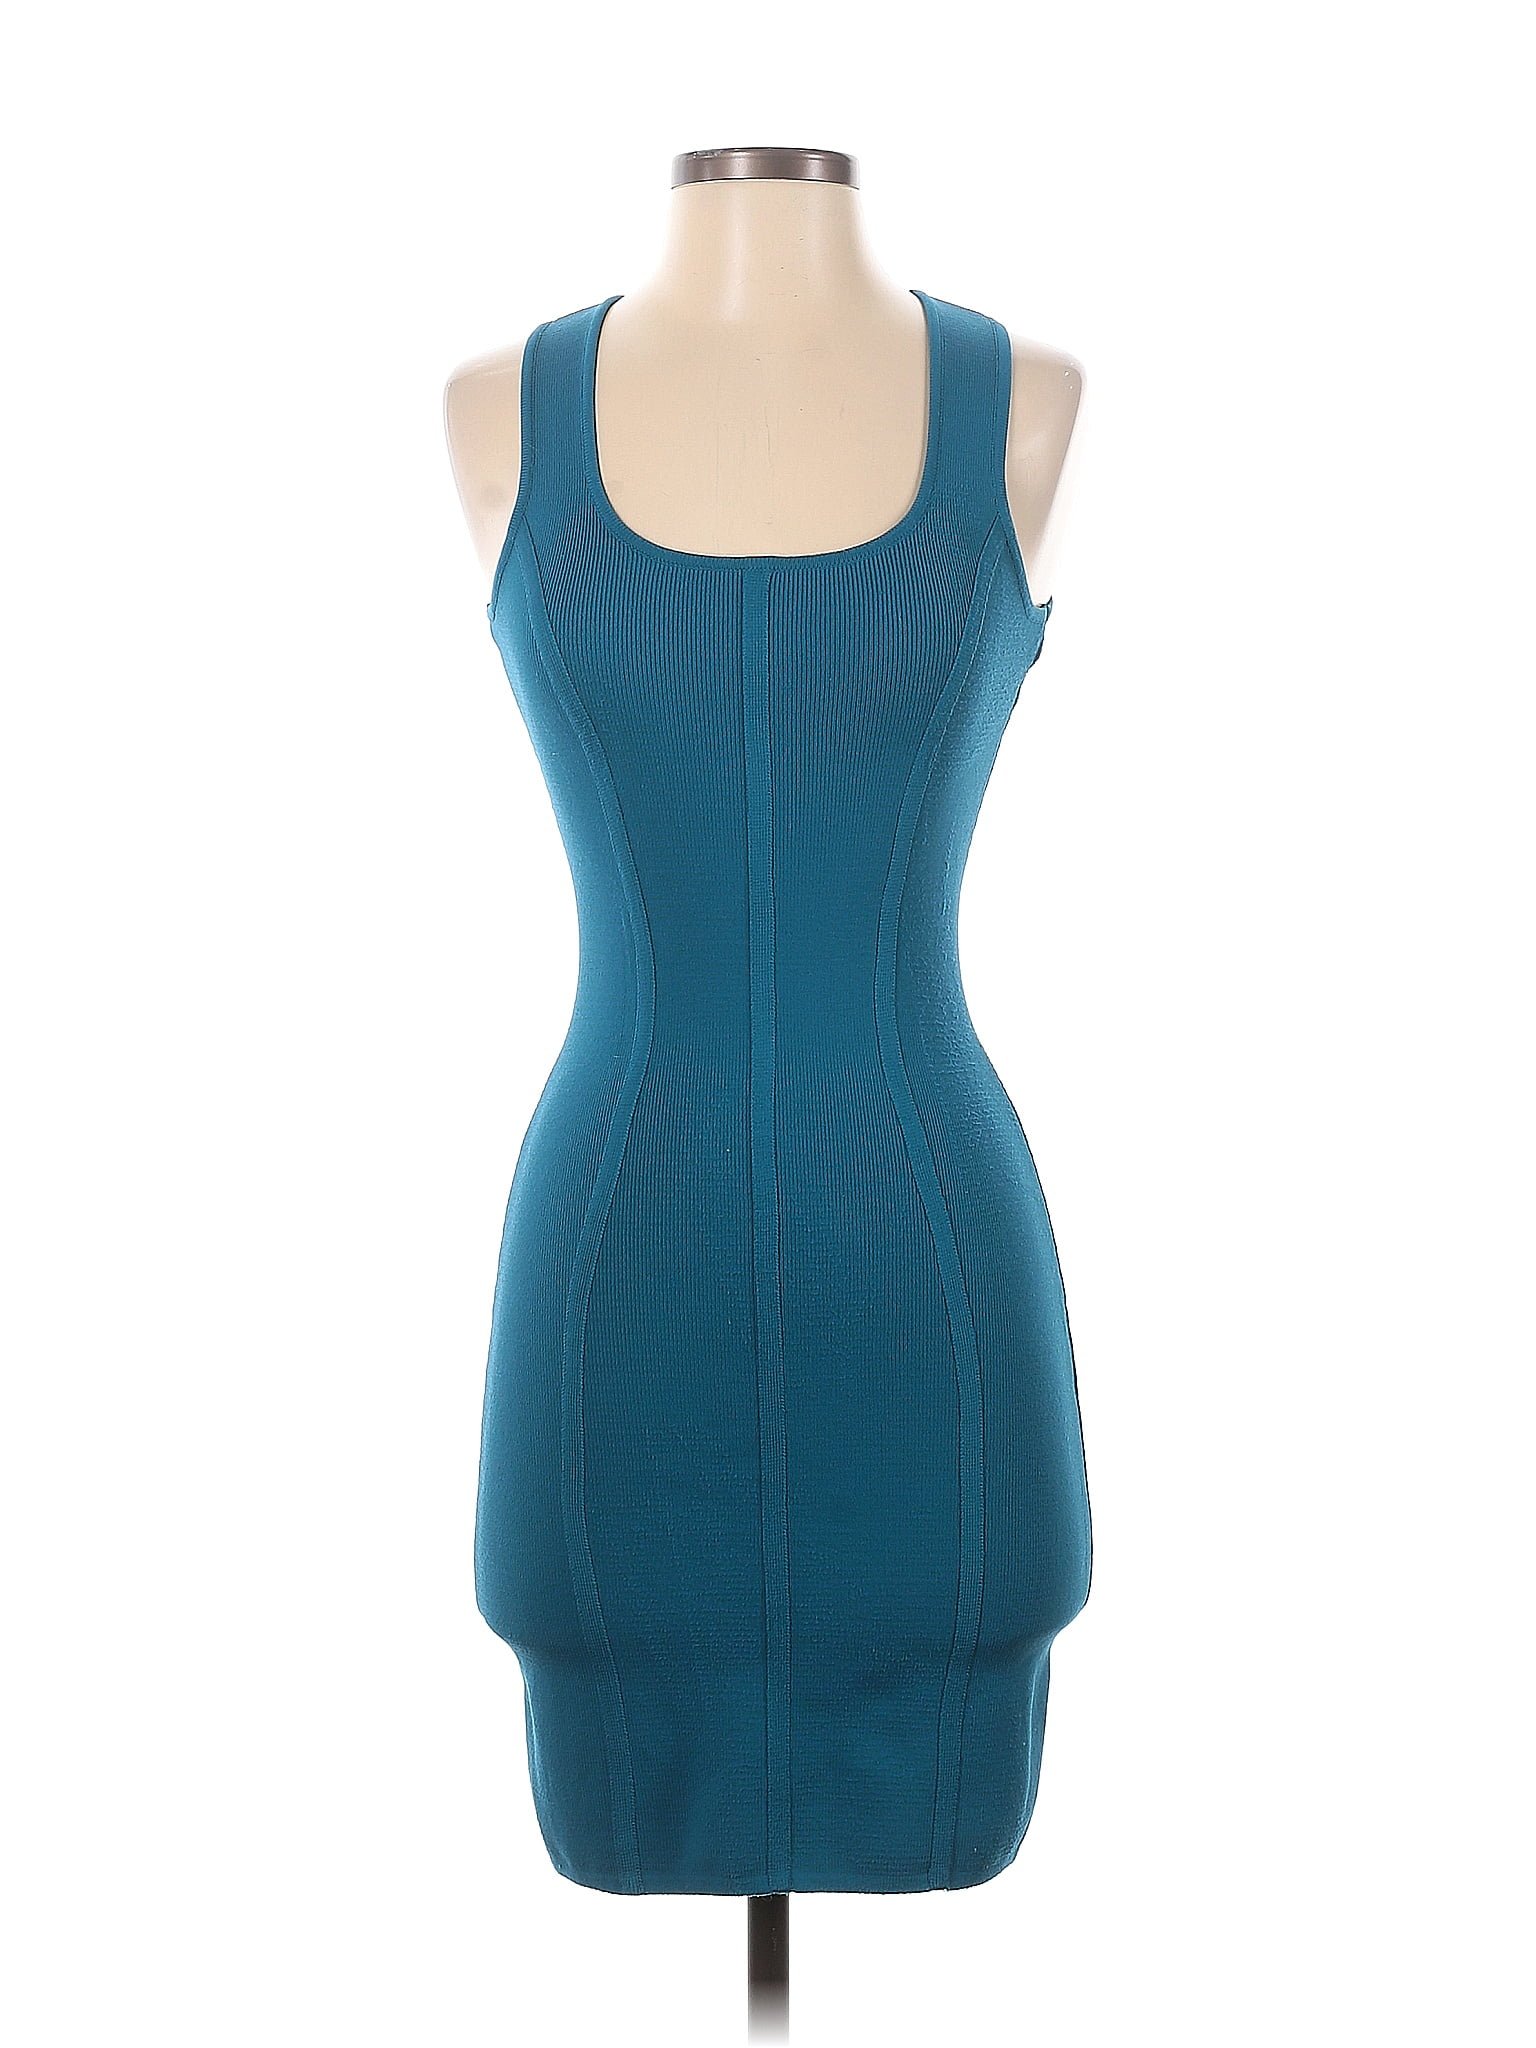 Martha Stewart Solid Blue Jeggings Size XL - 68% off